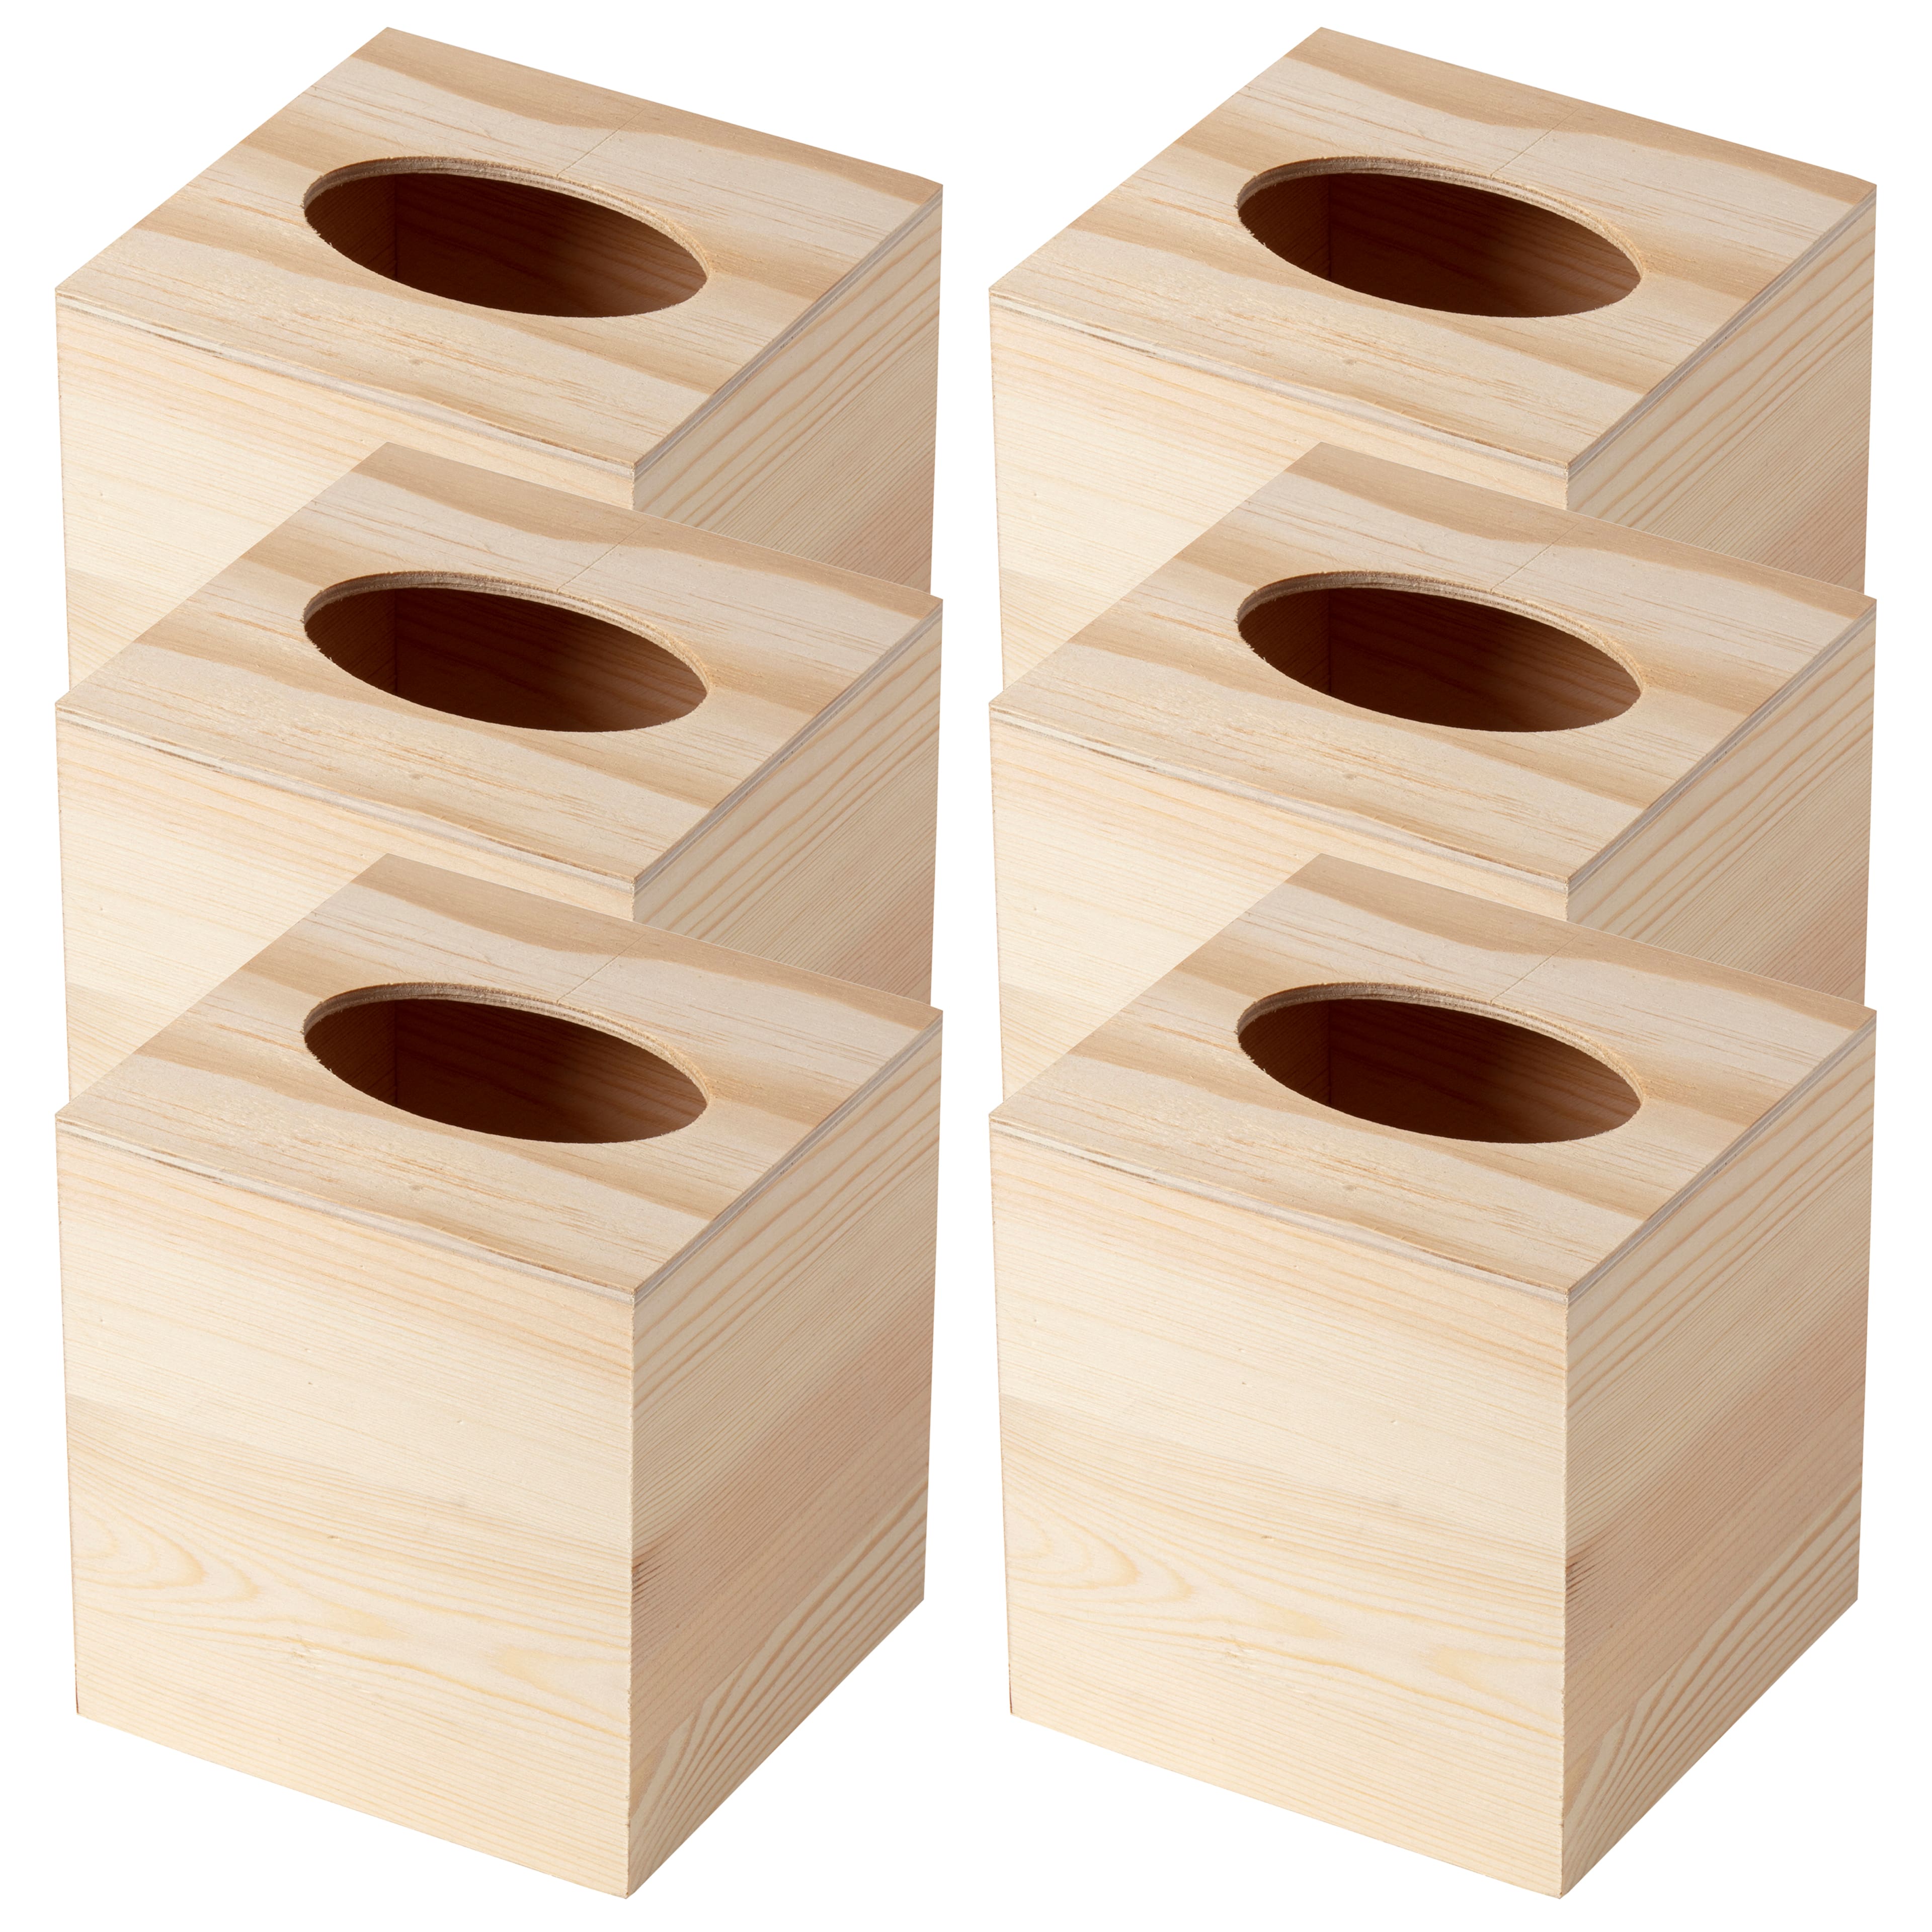 Wooden tie box, Tie Organizer, Decorative Storage Box Wood Box